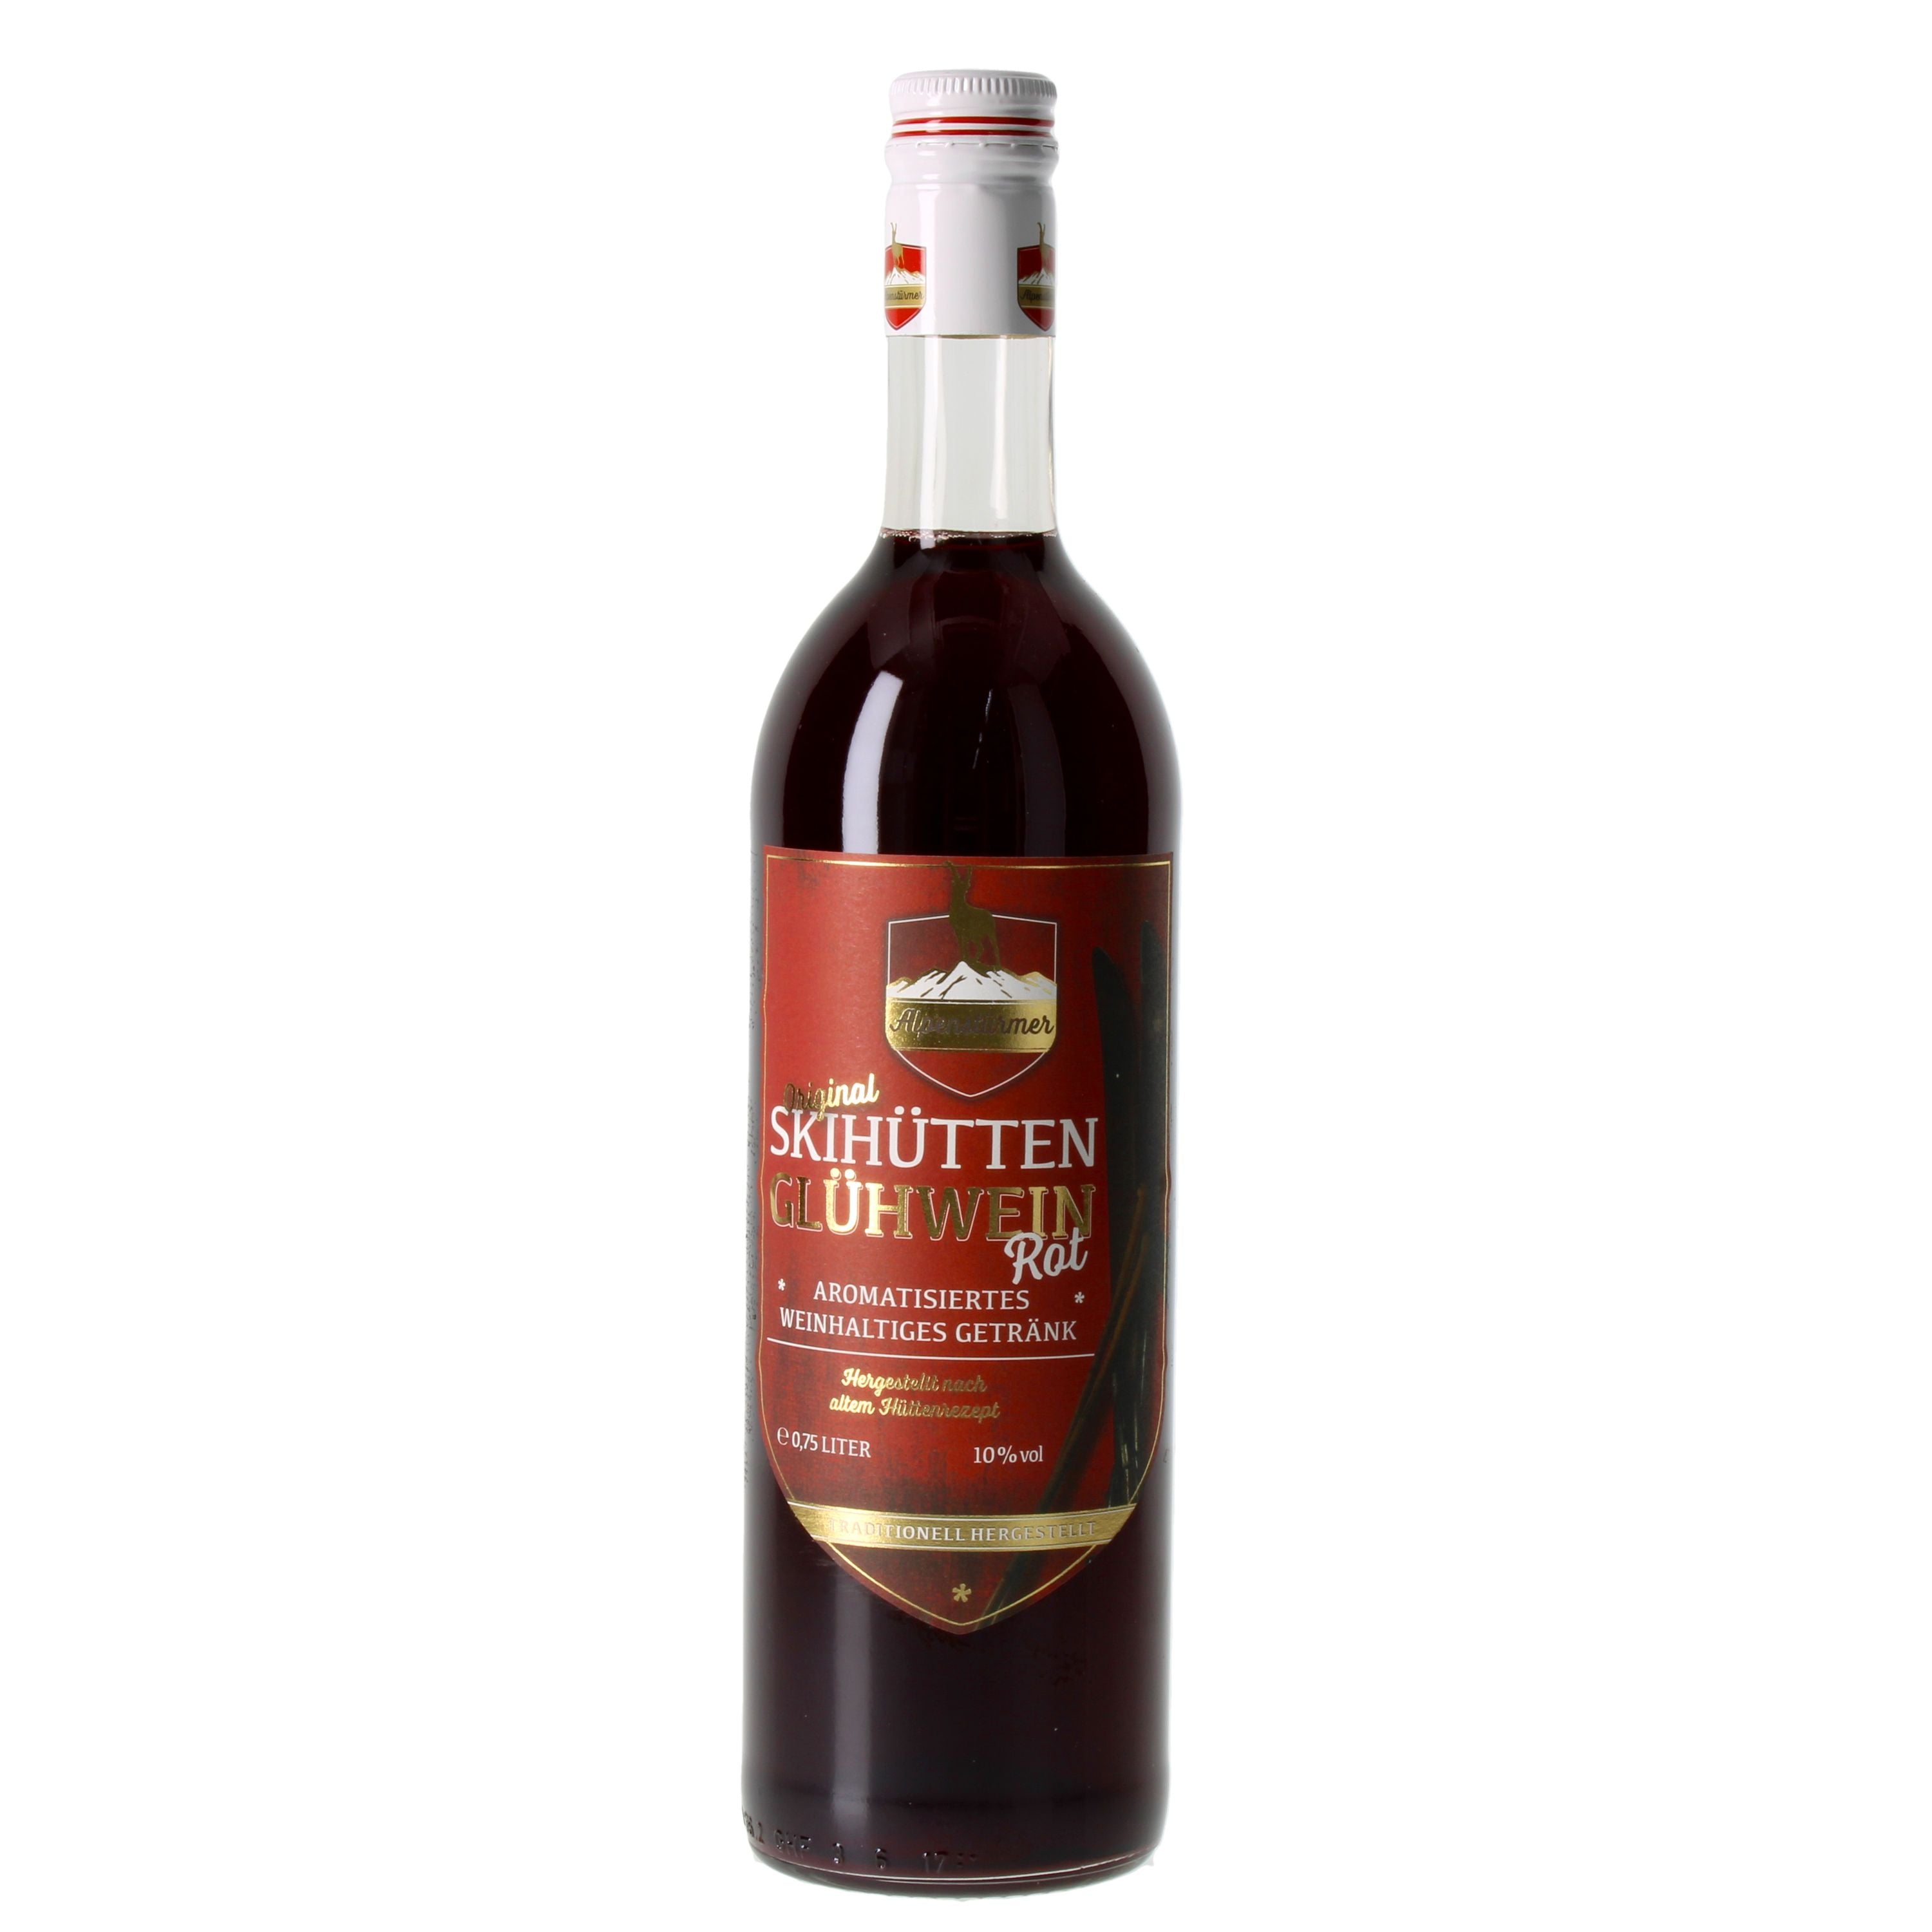 Alpenstürmer ski huts mulled wine red 0.75l, alc. 10% by volume, mulled wine Austria